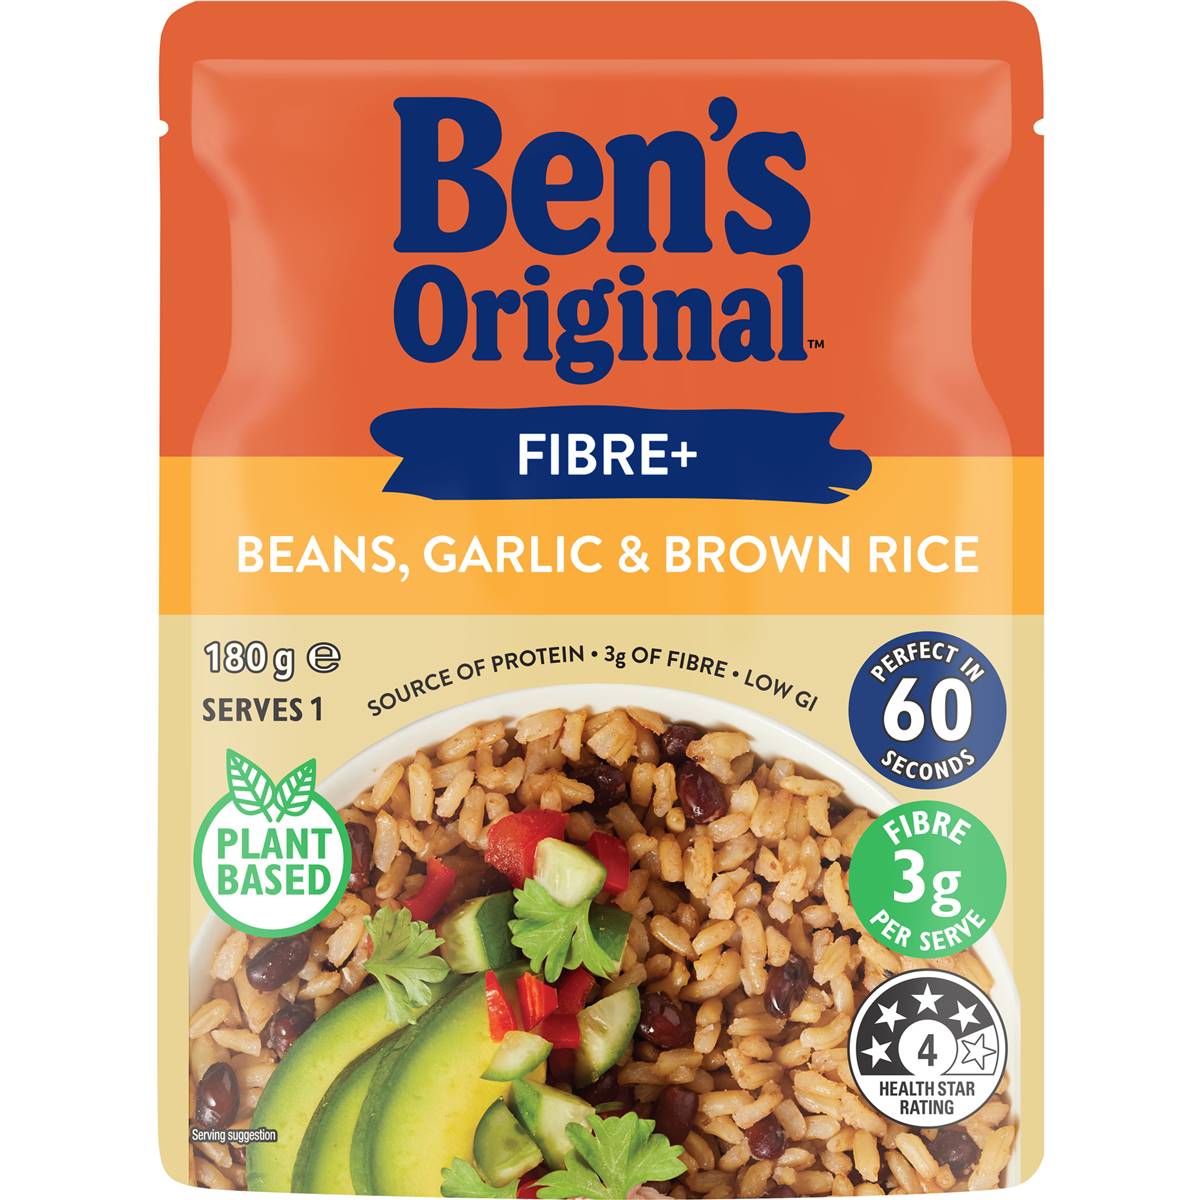 Ben's Original Fibre+ Beans Garlic & Brown Rice 180g